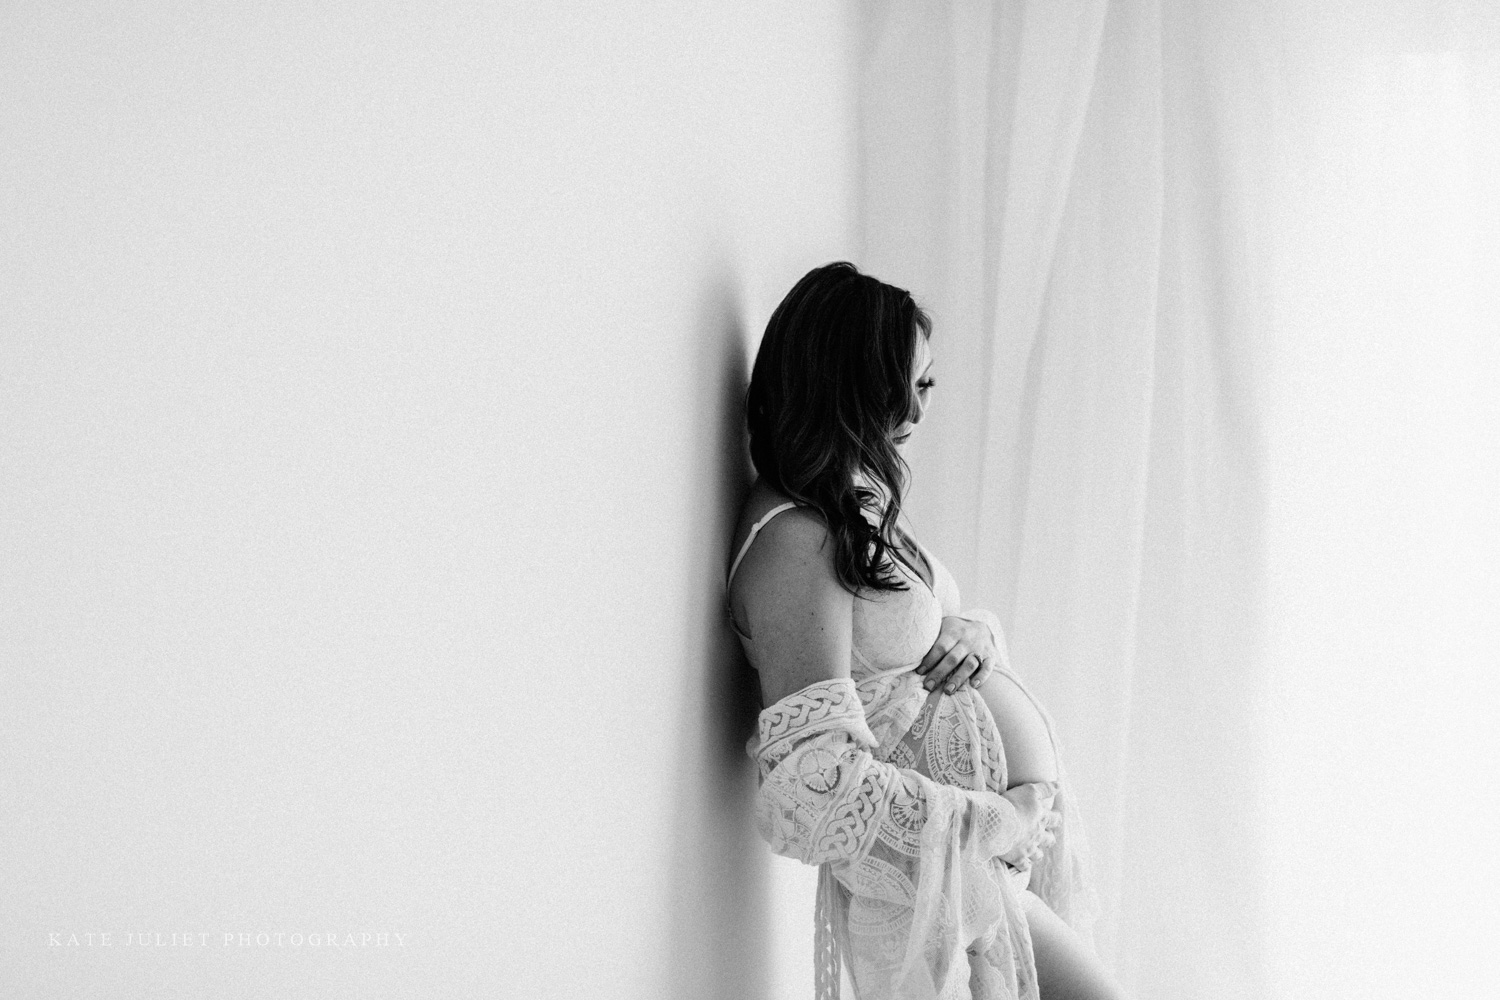 Loudoun County VA Pregnancy Photographer | Kate Juliet Photography